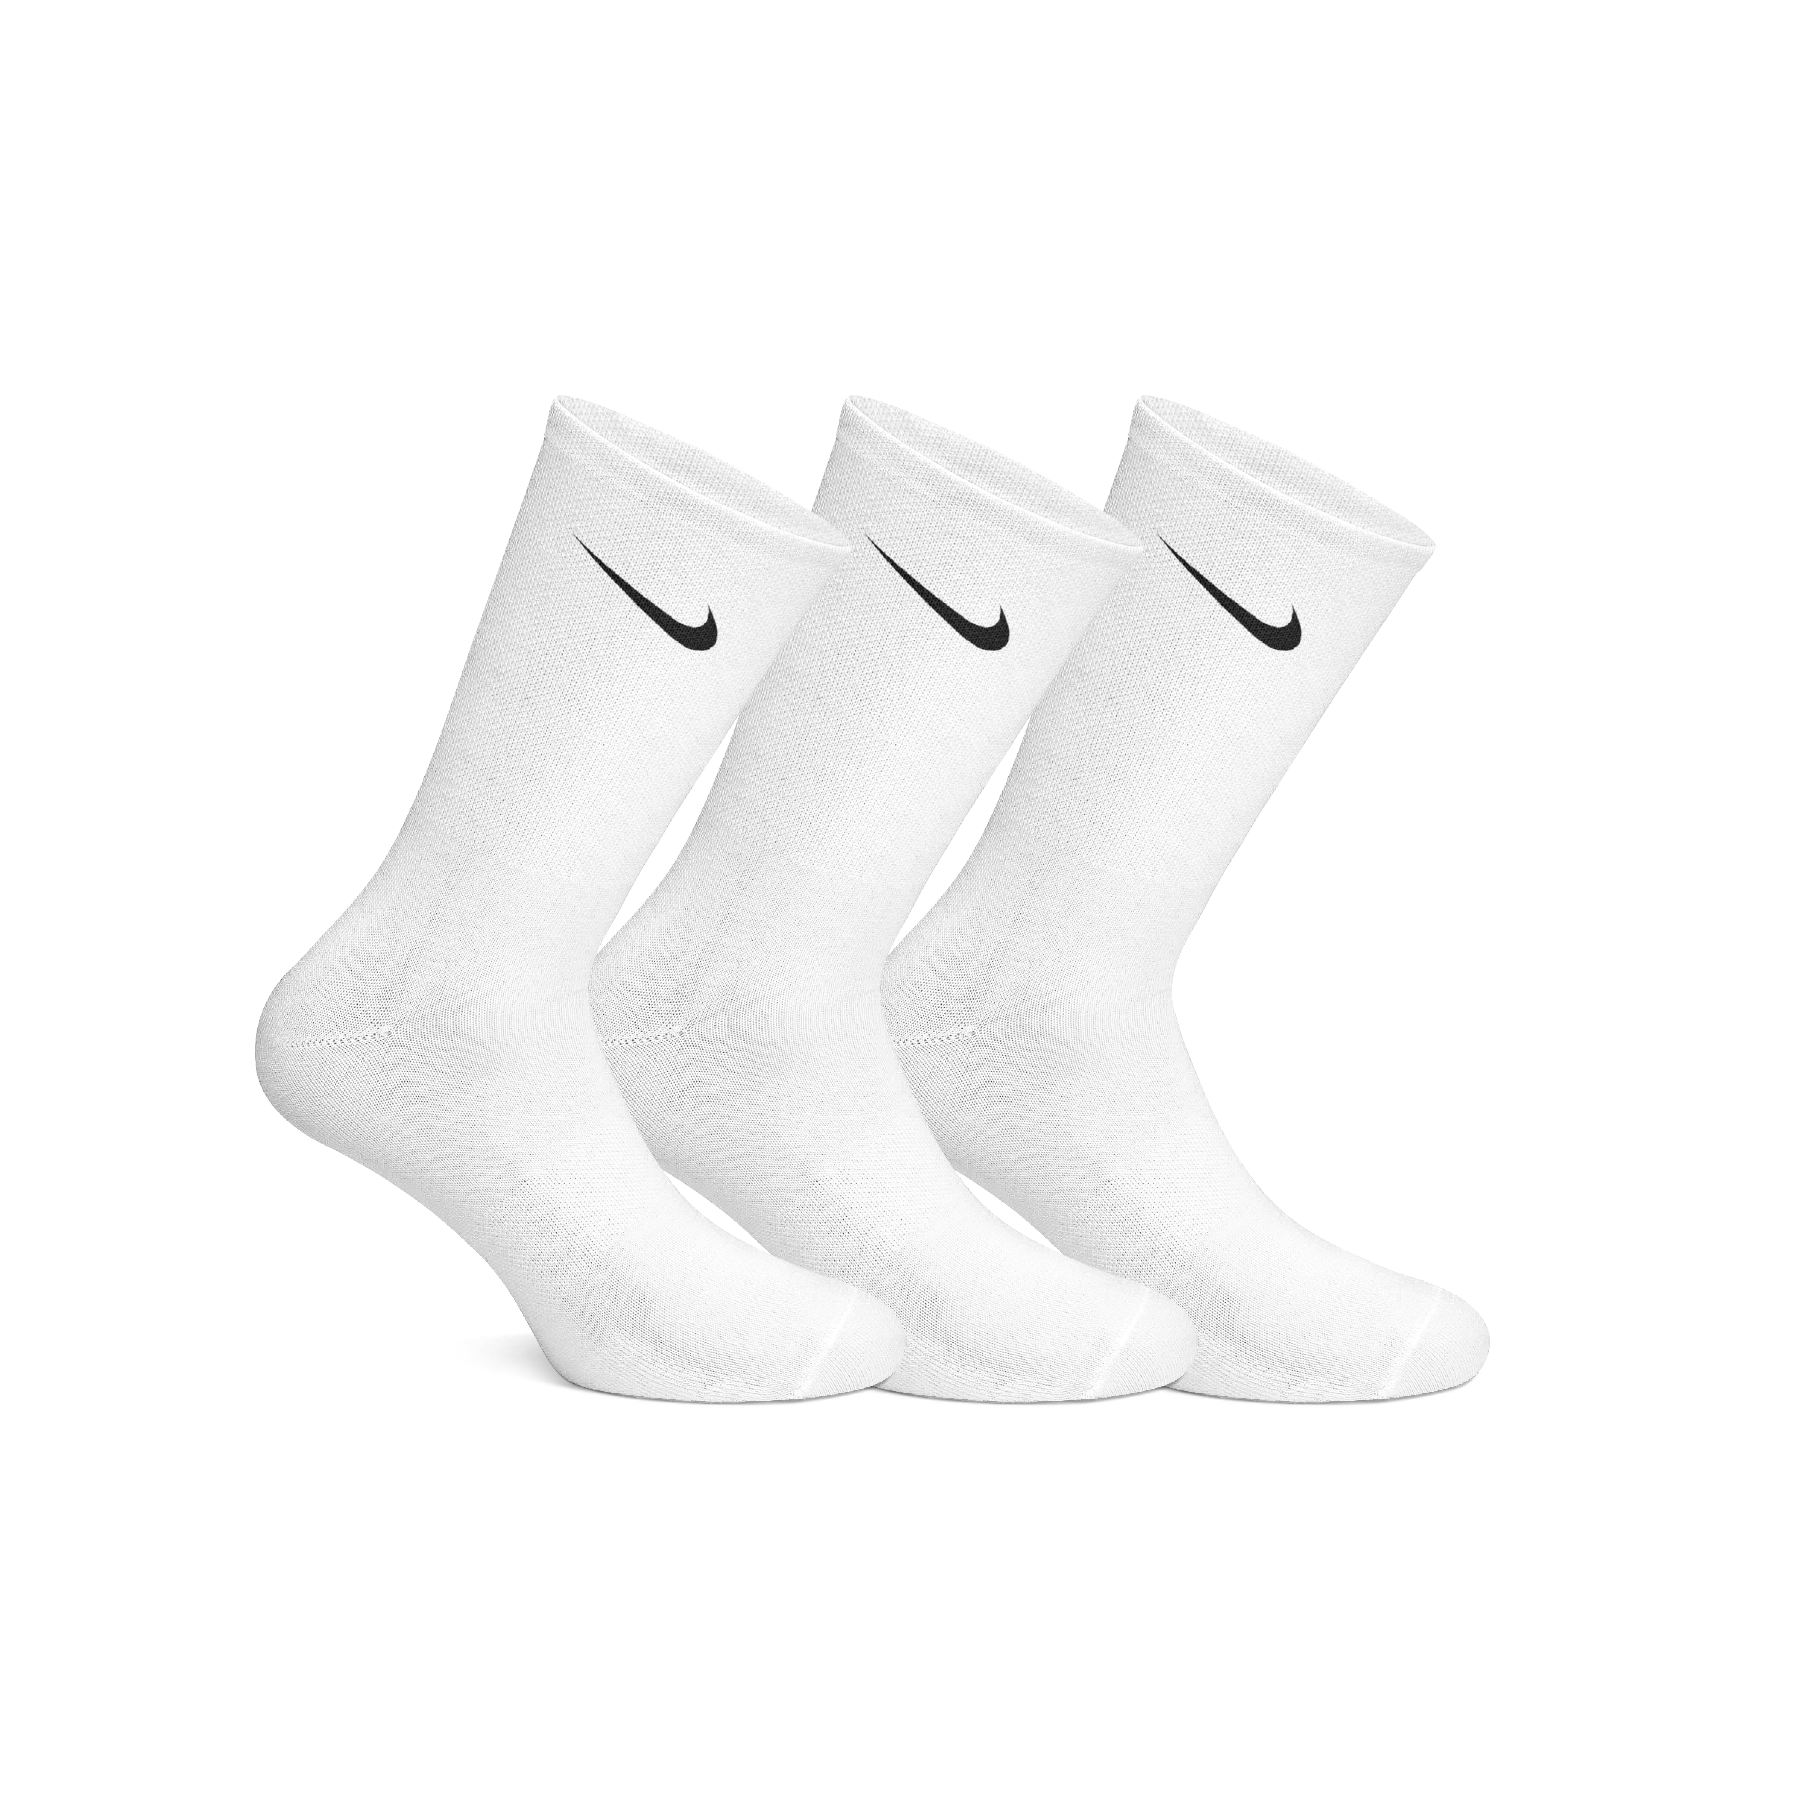 Nike White 3 pack socks